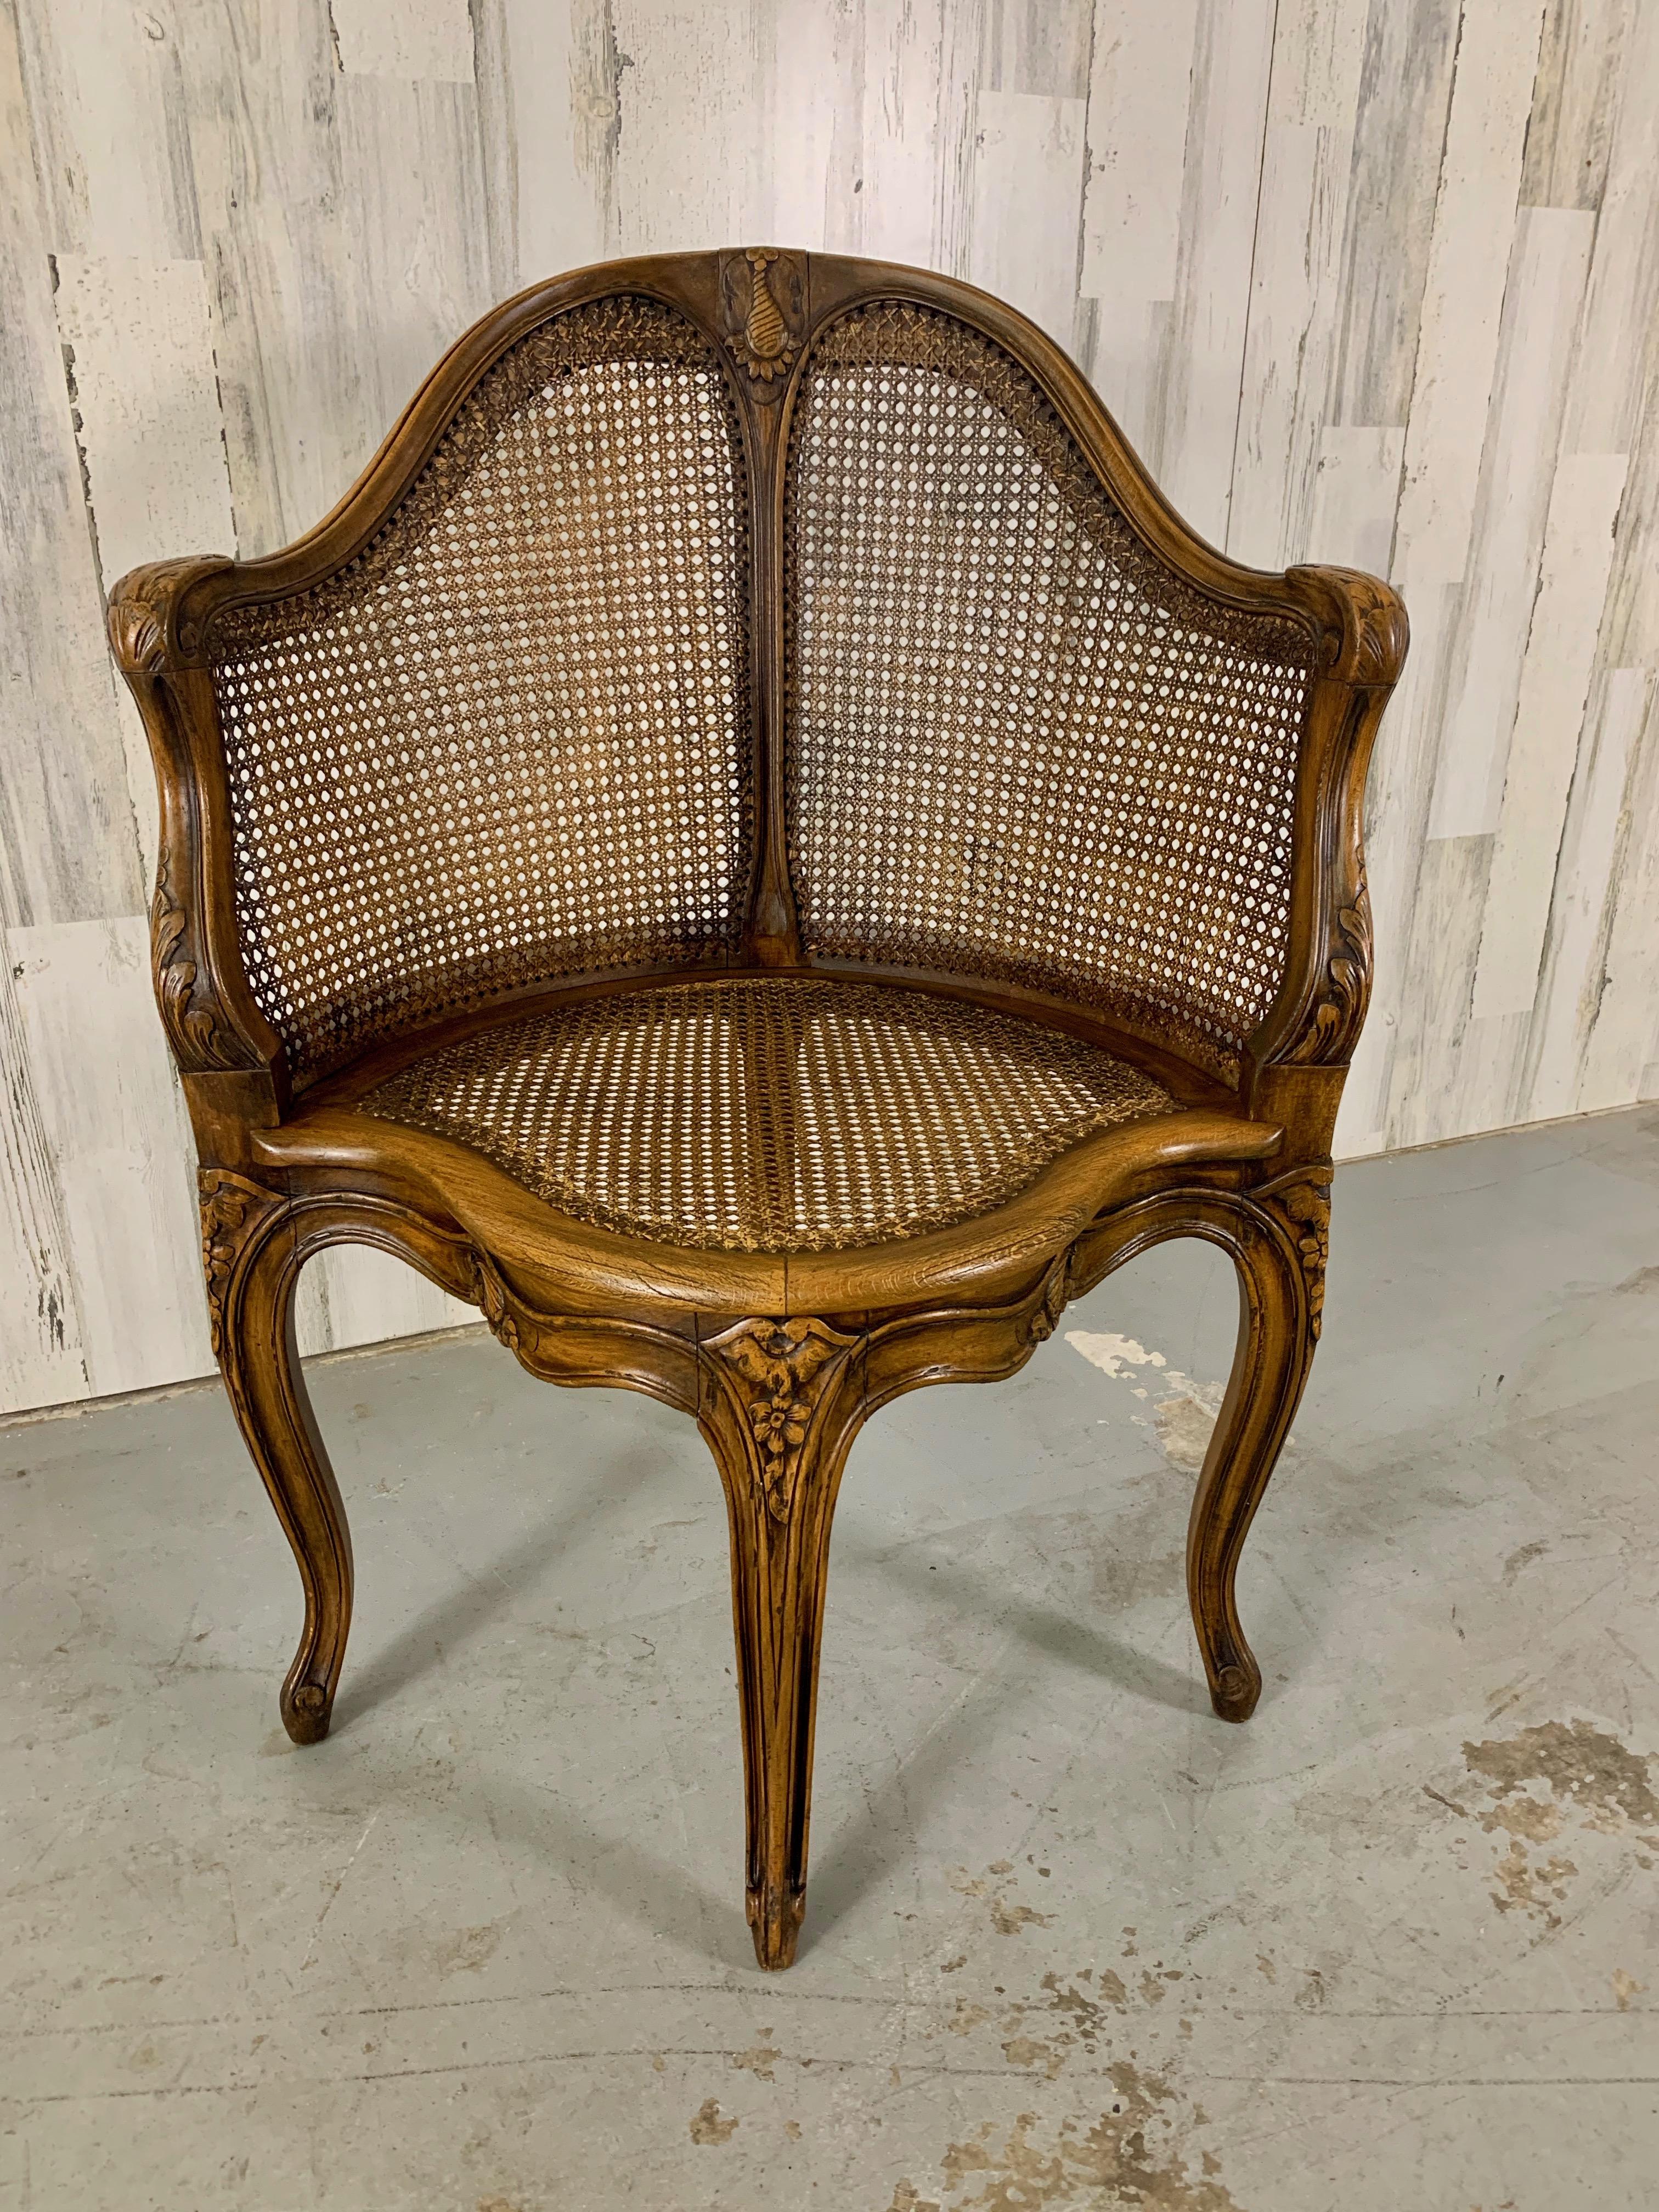 19th Century Antique Cane Corner Chair For Sale